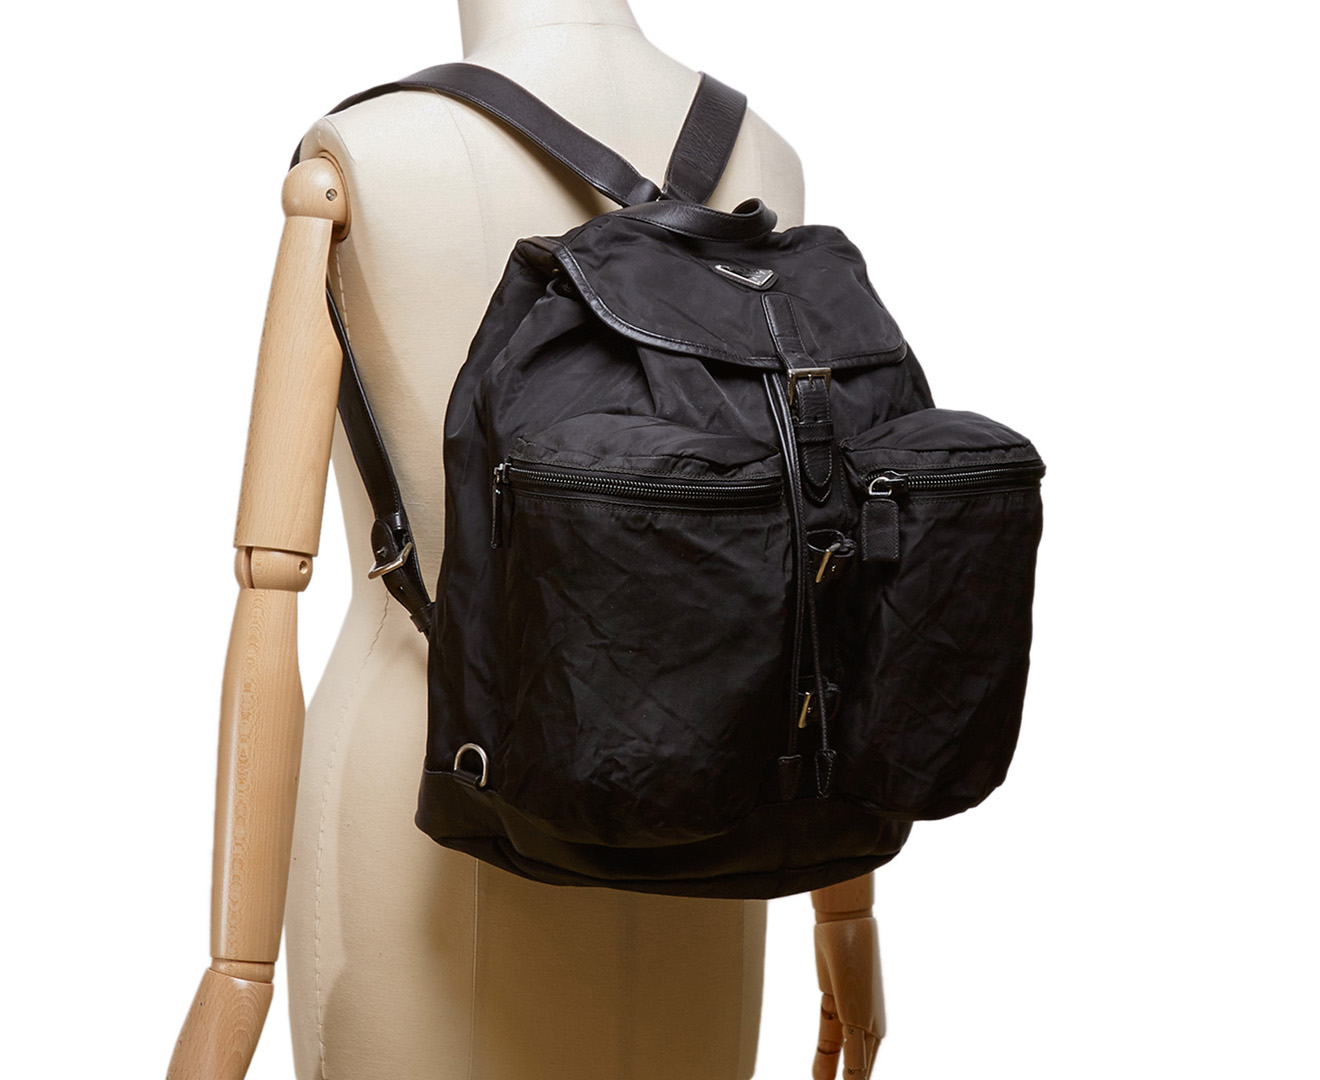 Pre-Loved Prada Nylon Backpack 7JPRBP007 - Black | GroceryRun.com.au